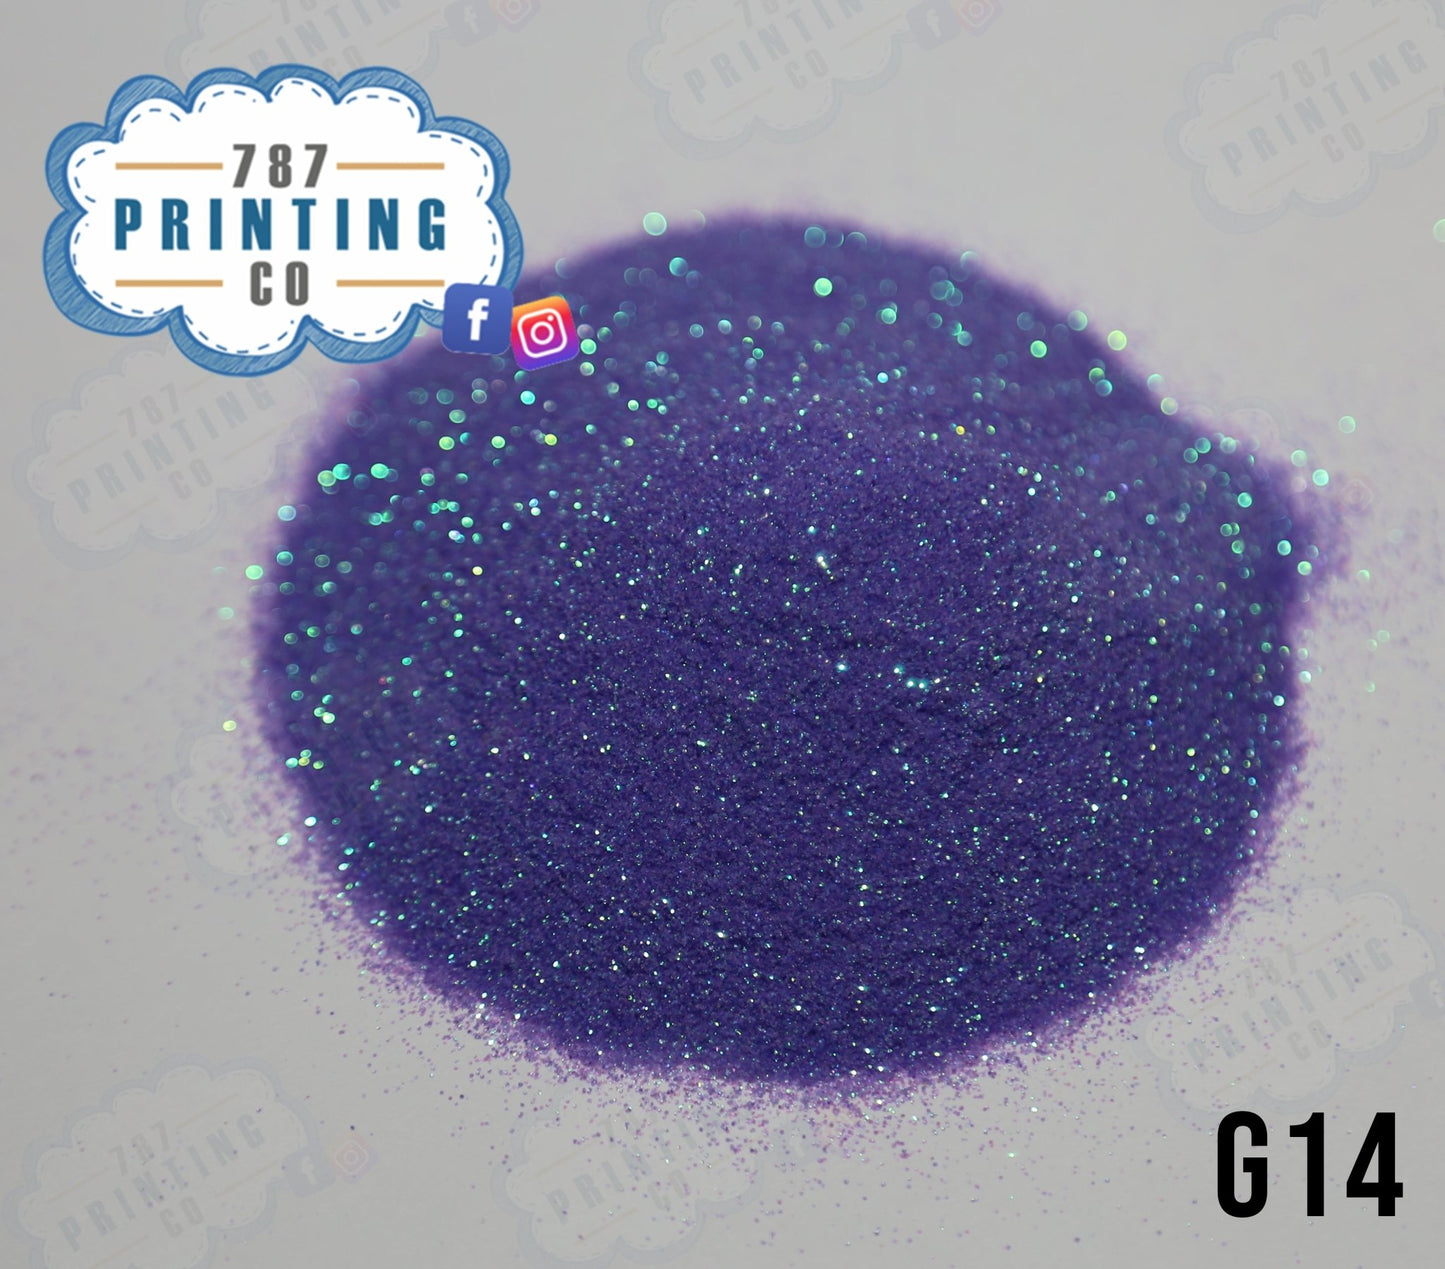 Buyé Ultra Fine Glitter 1/128 (G14) - 787 Printing Co.